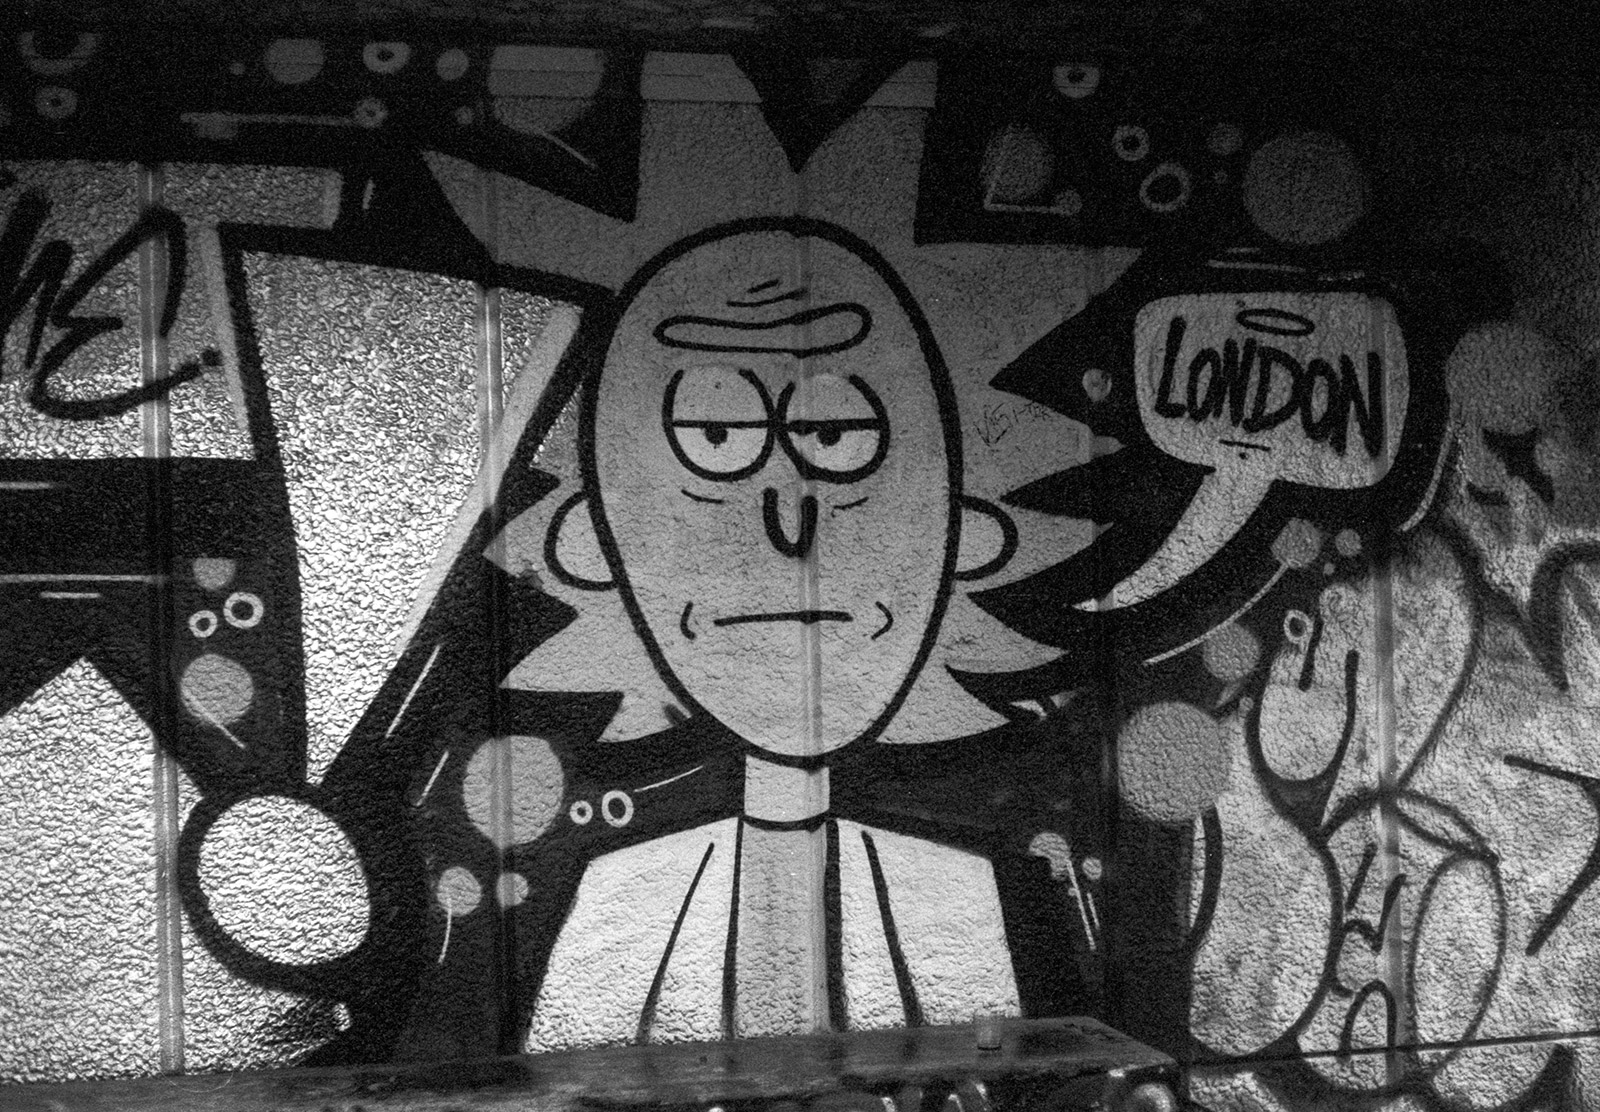 Morty graffiti